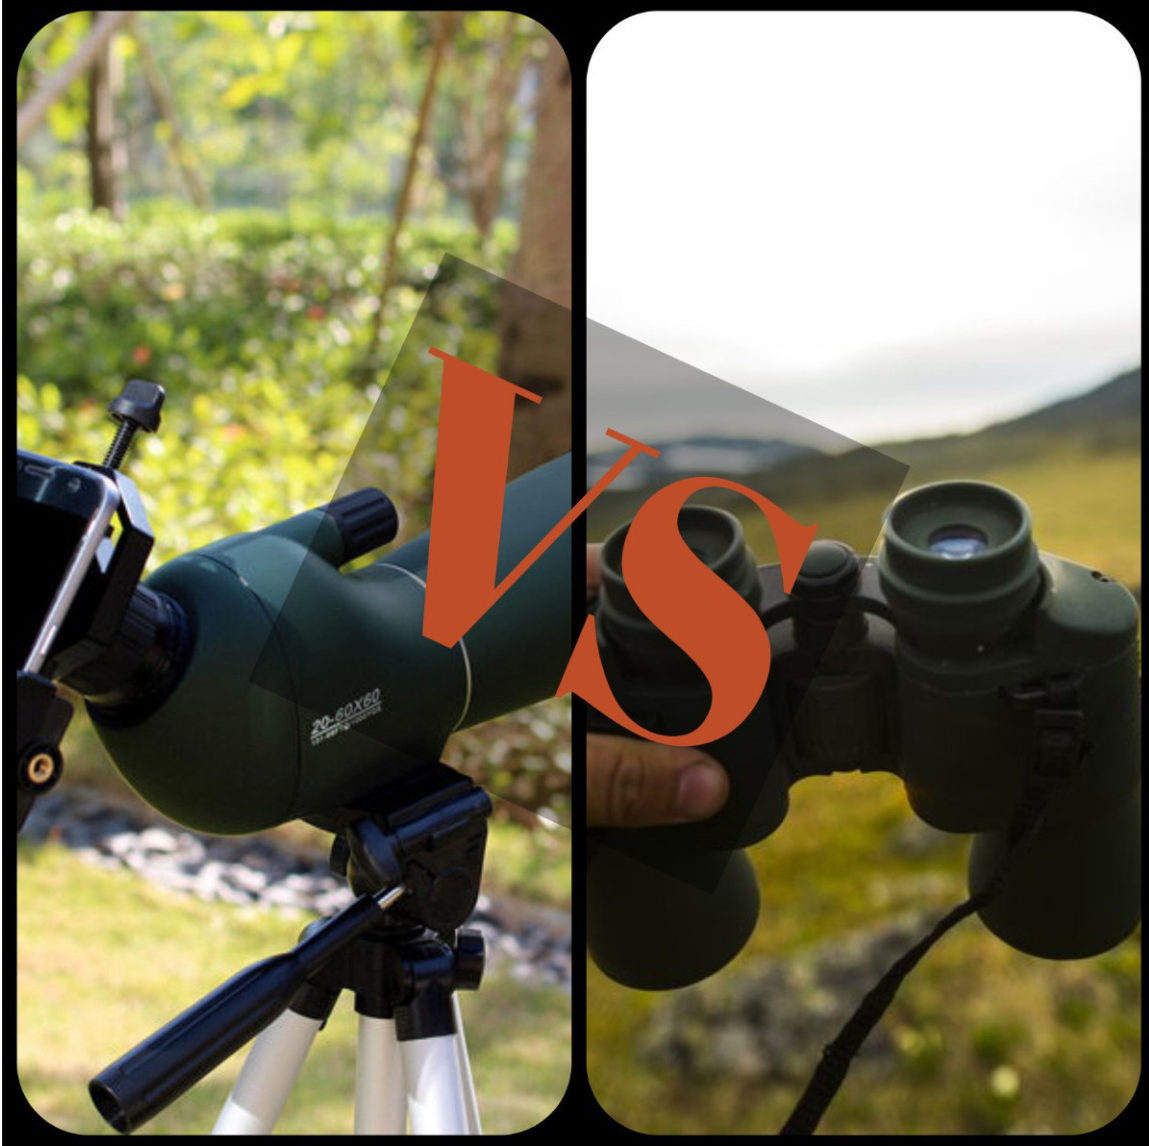 Binoculars or spotting scope for bird watching